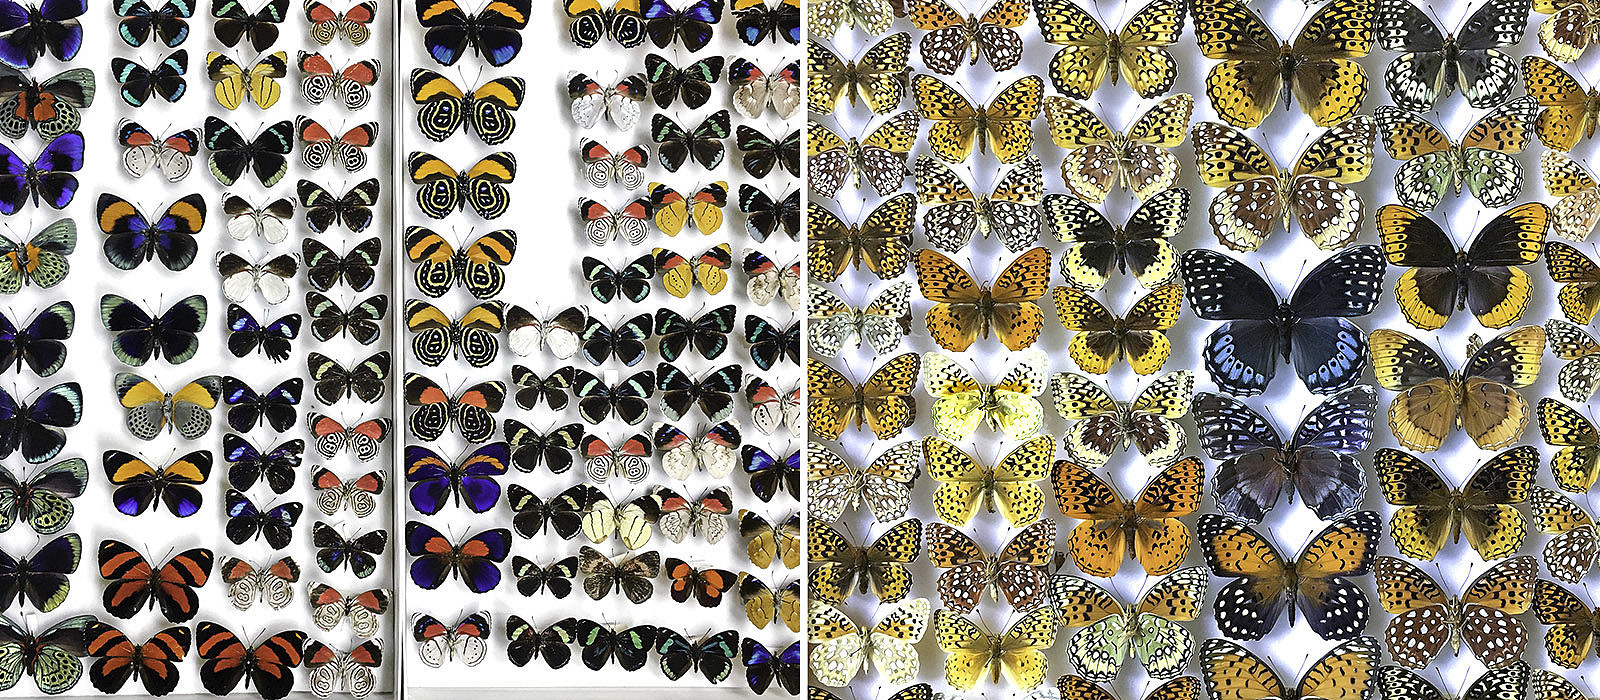 Butterfly specimens by Bryan Pfeiffer